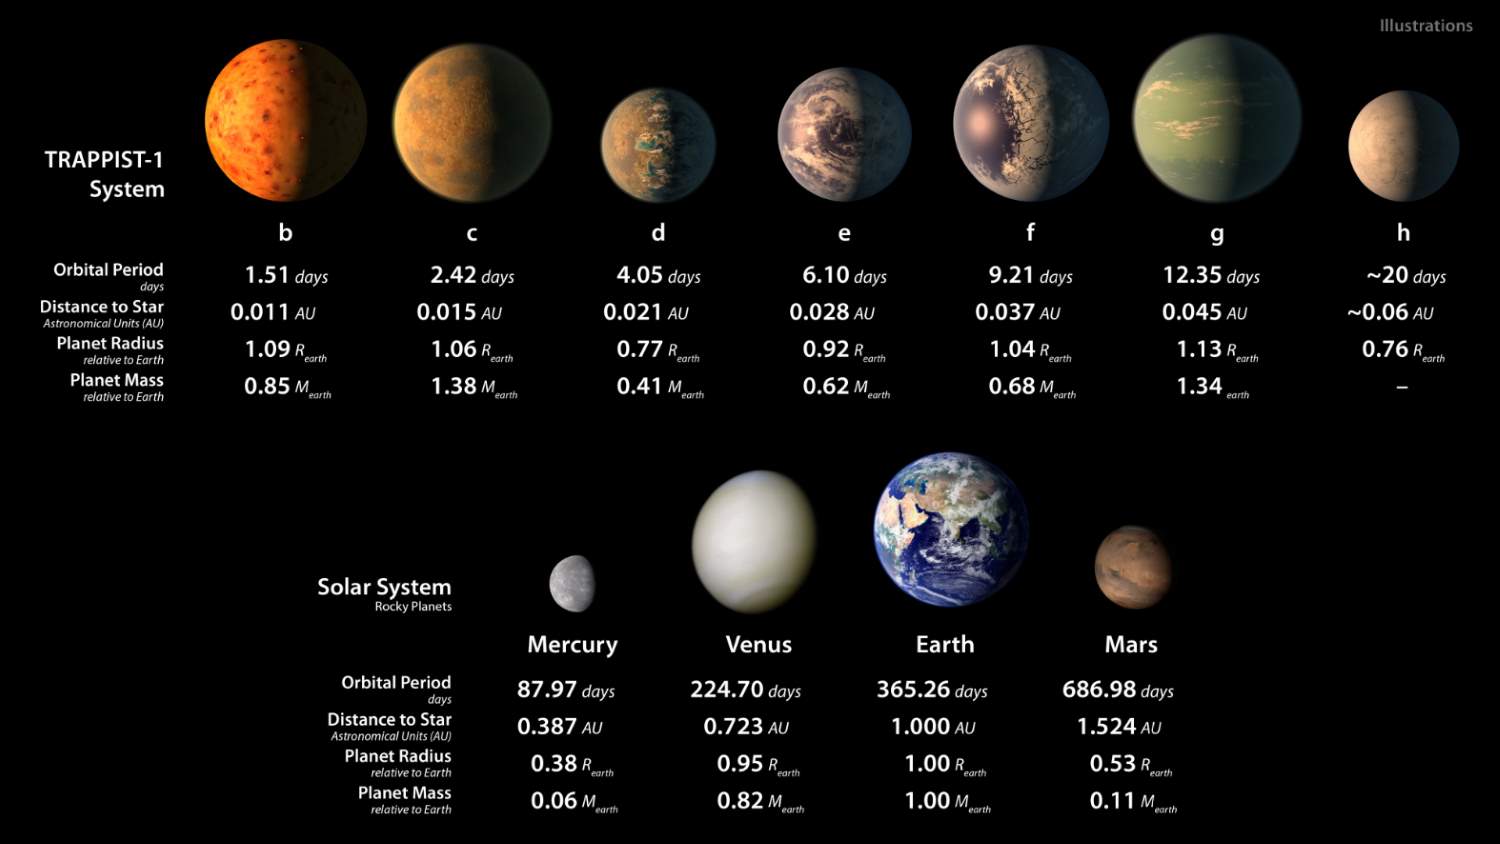 TRAPPIST-1 System vs Solar System